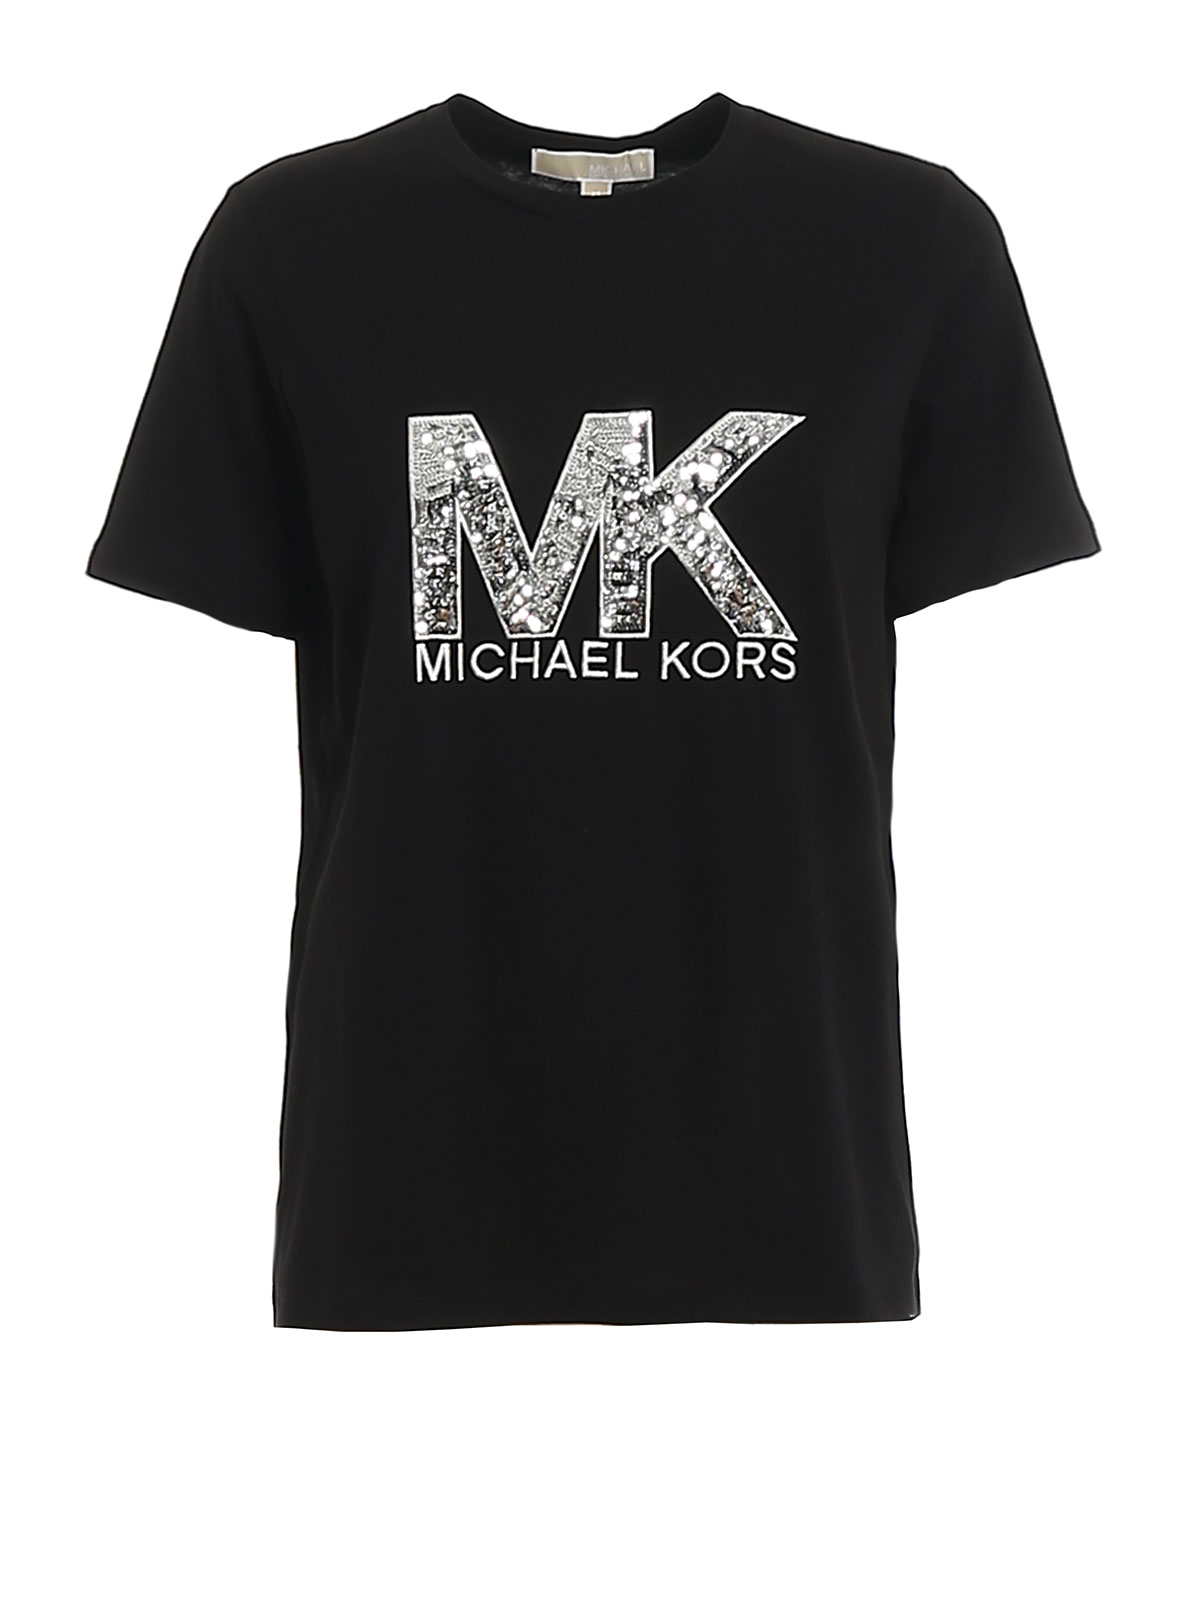 michael kors logo tee shirts